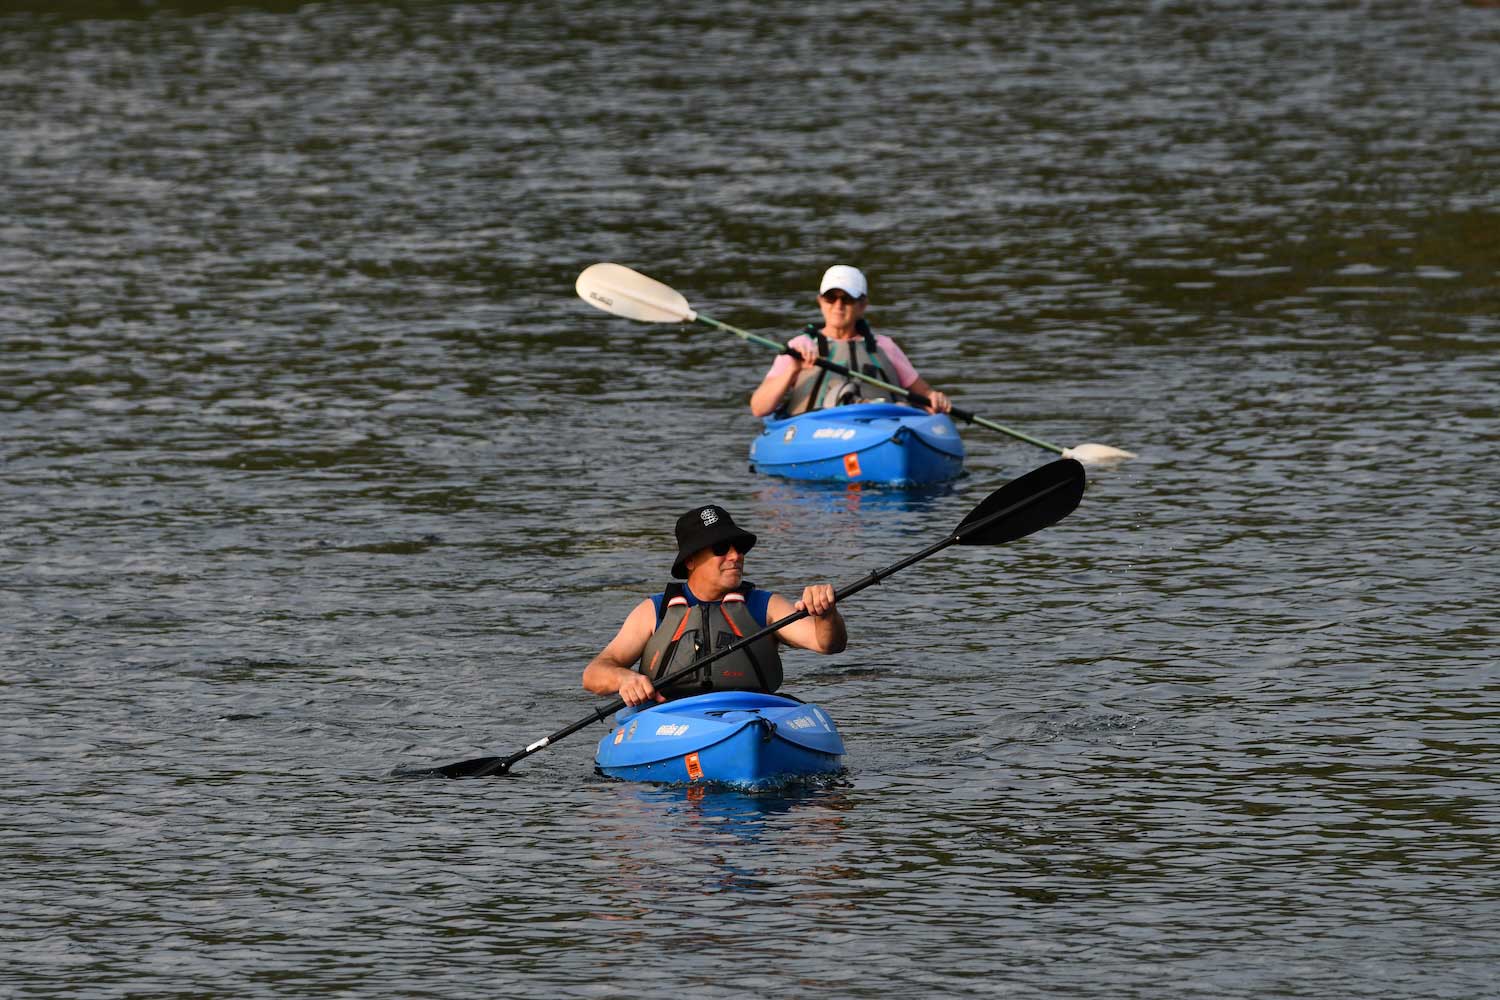 Two kayakers paddling on a lake.